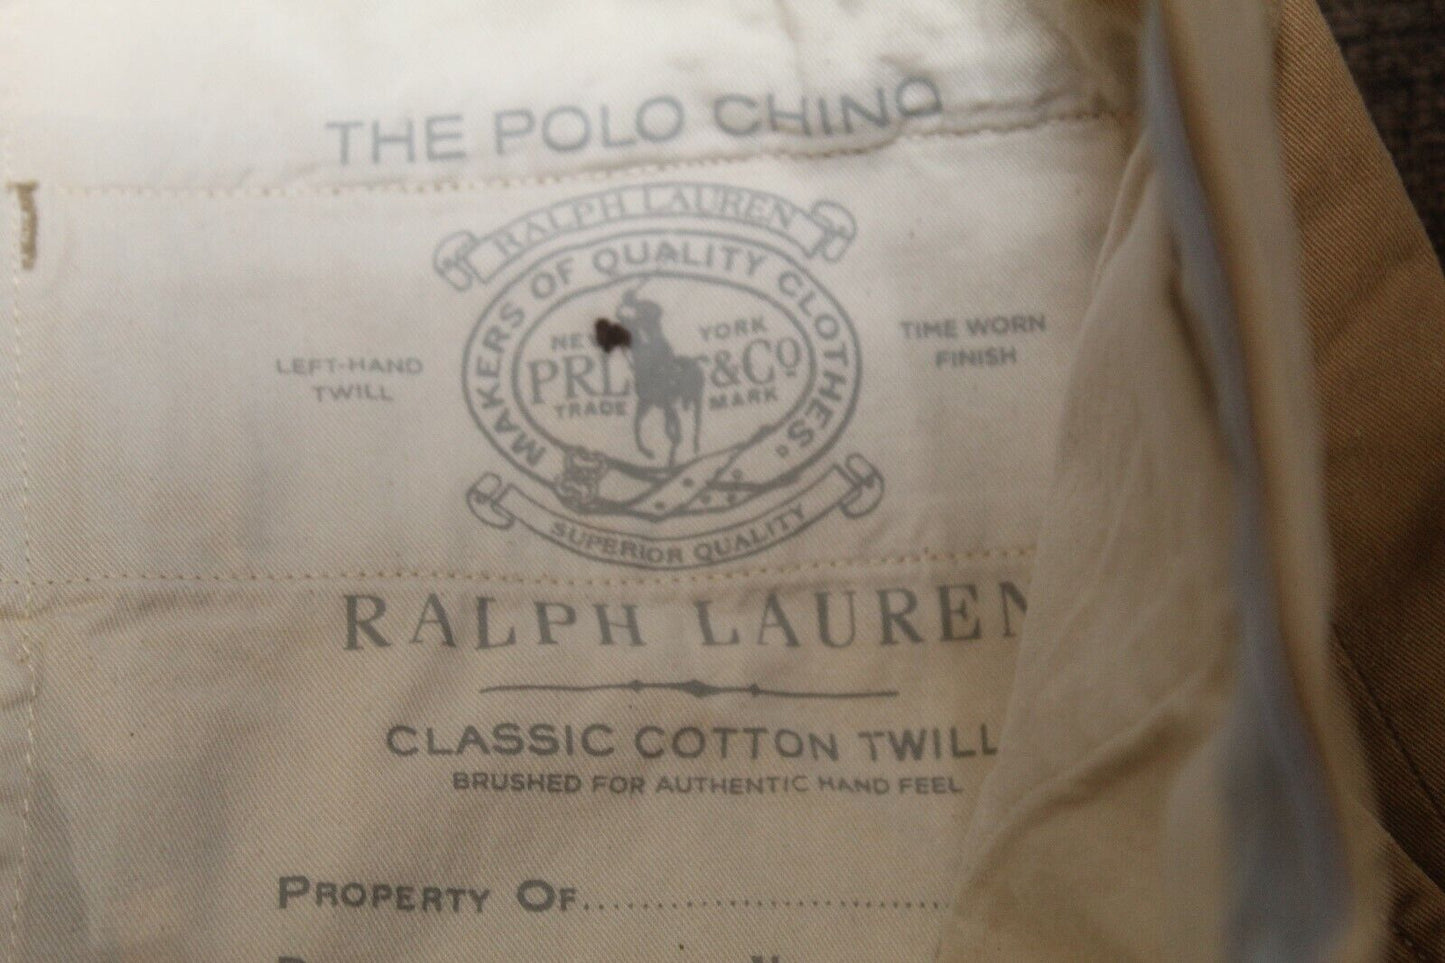 *NWT*  $75.Polo Ralph Lauren Men Grey Chino Shorts Stretch Classic Fit 9" Siz 36